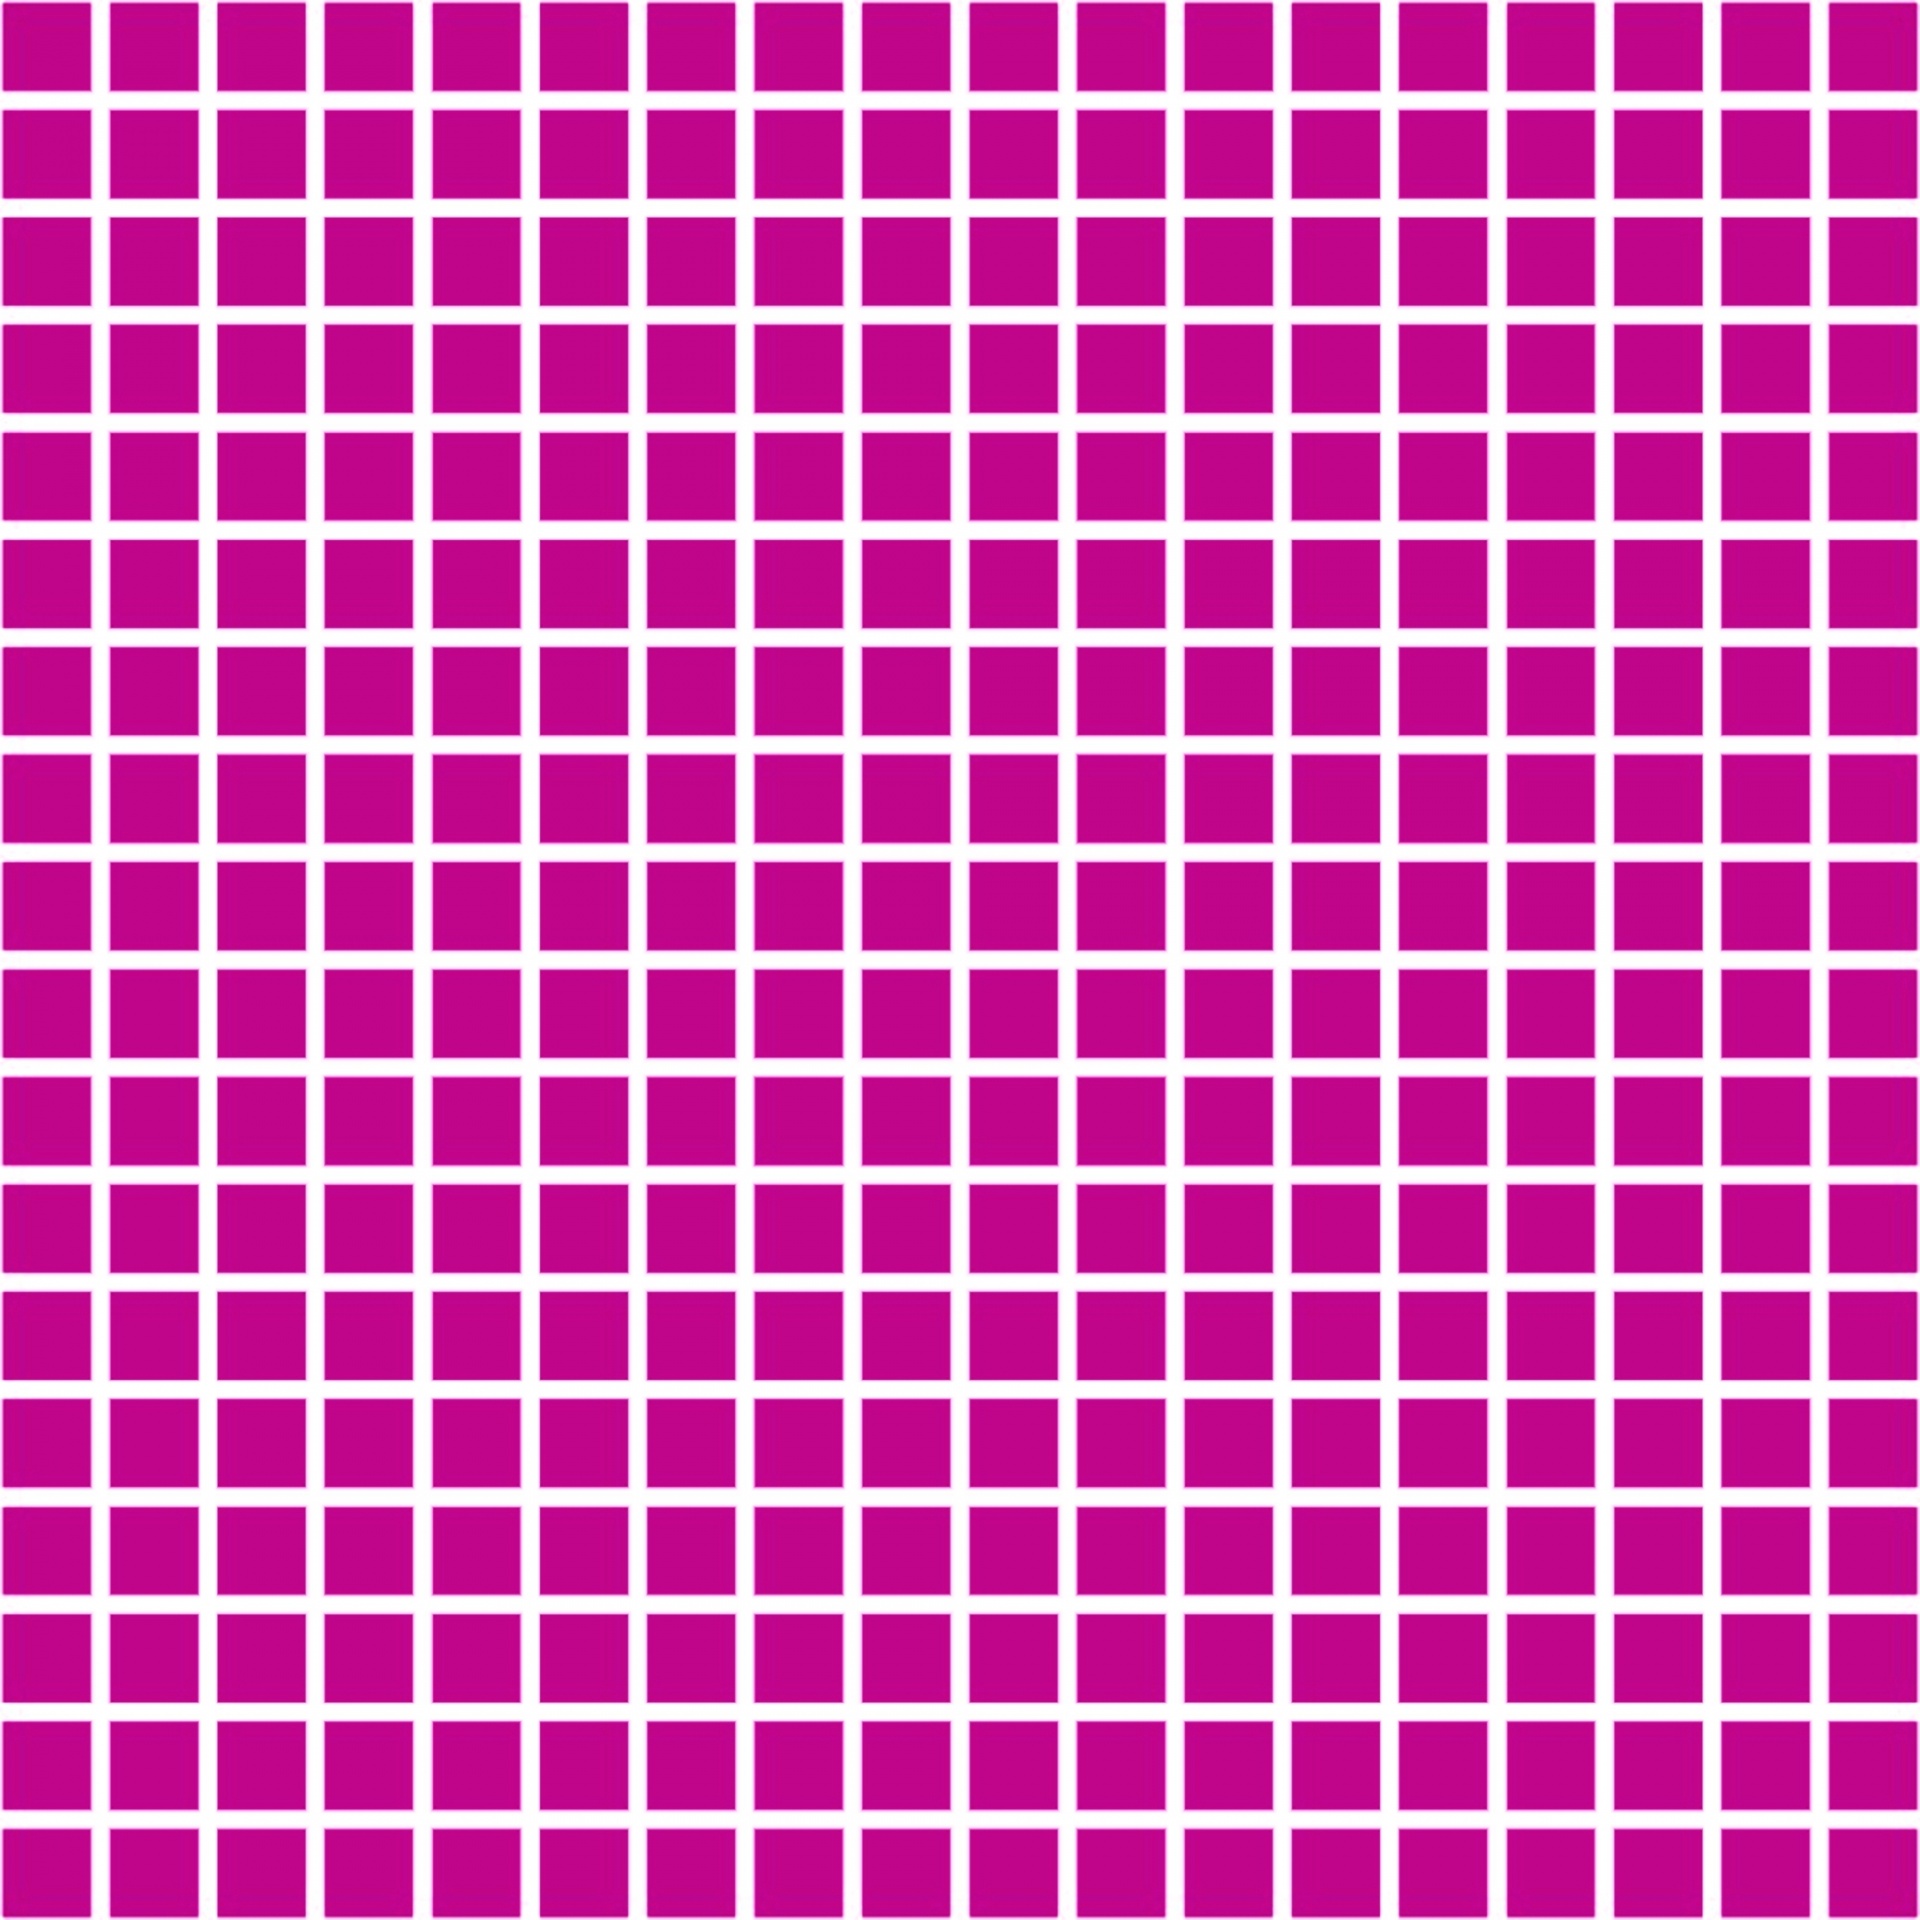 Checkered checkerboard pattern texture background digital graphic